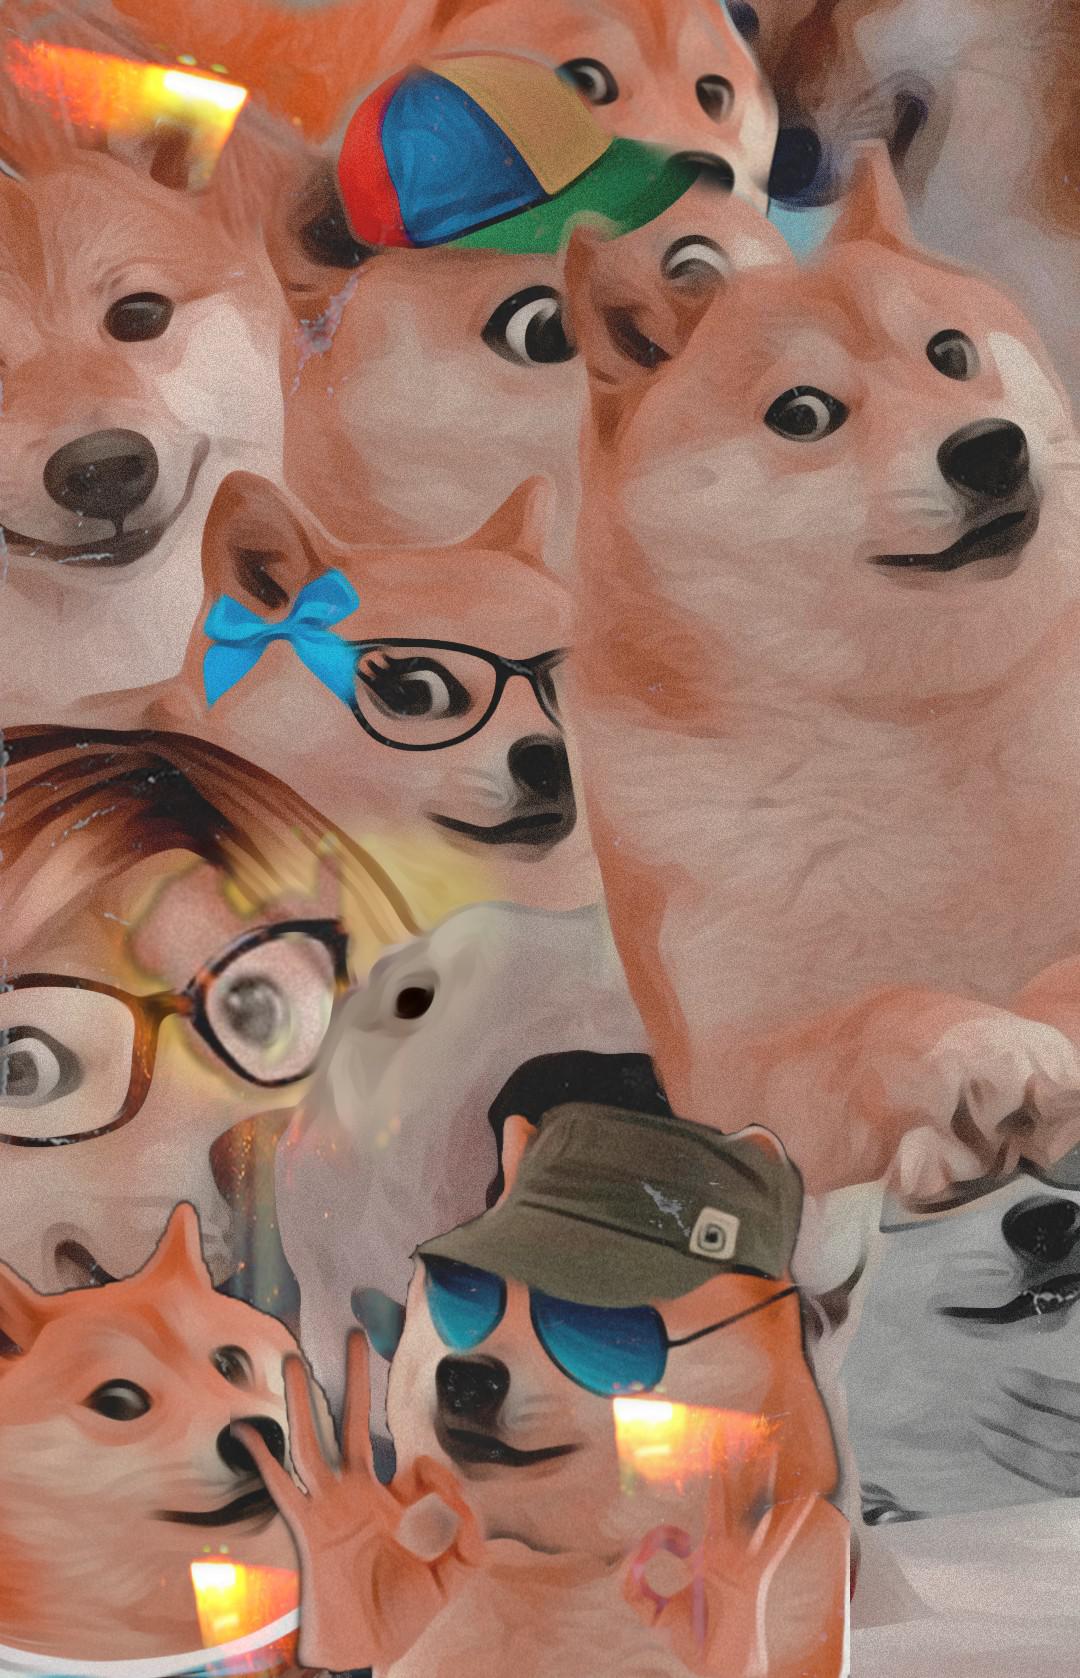 Doge Meme Wallpapers